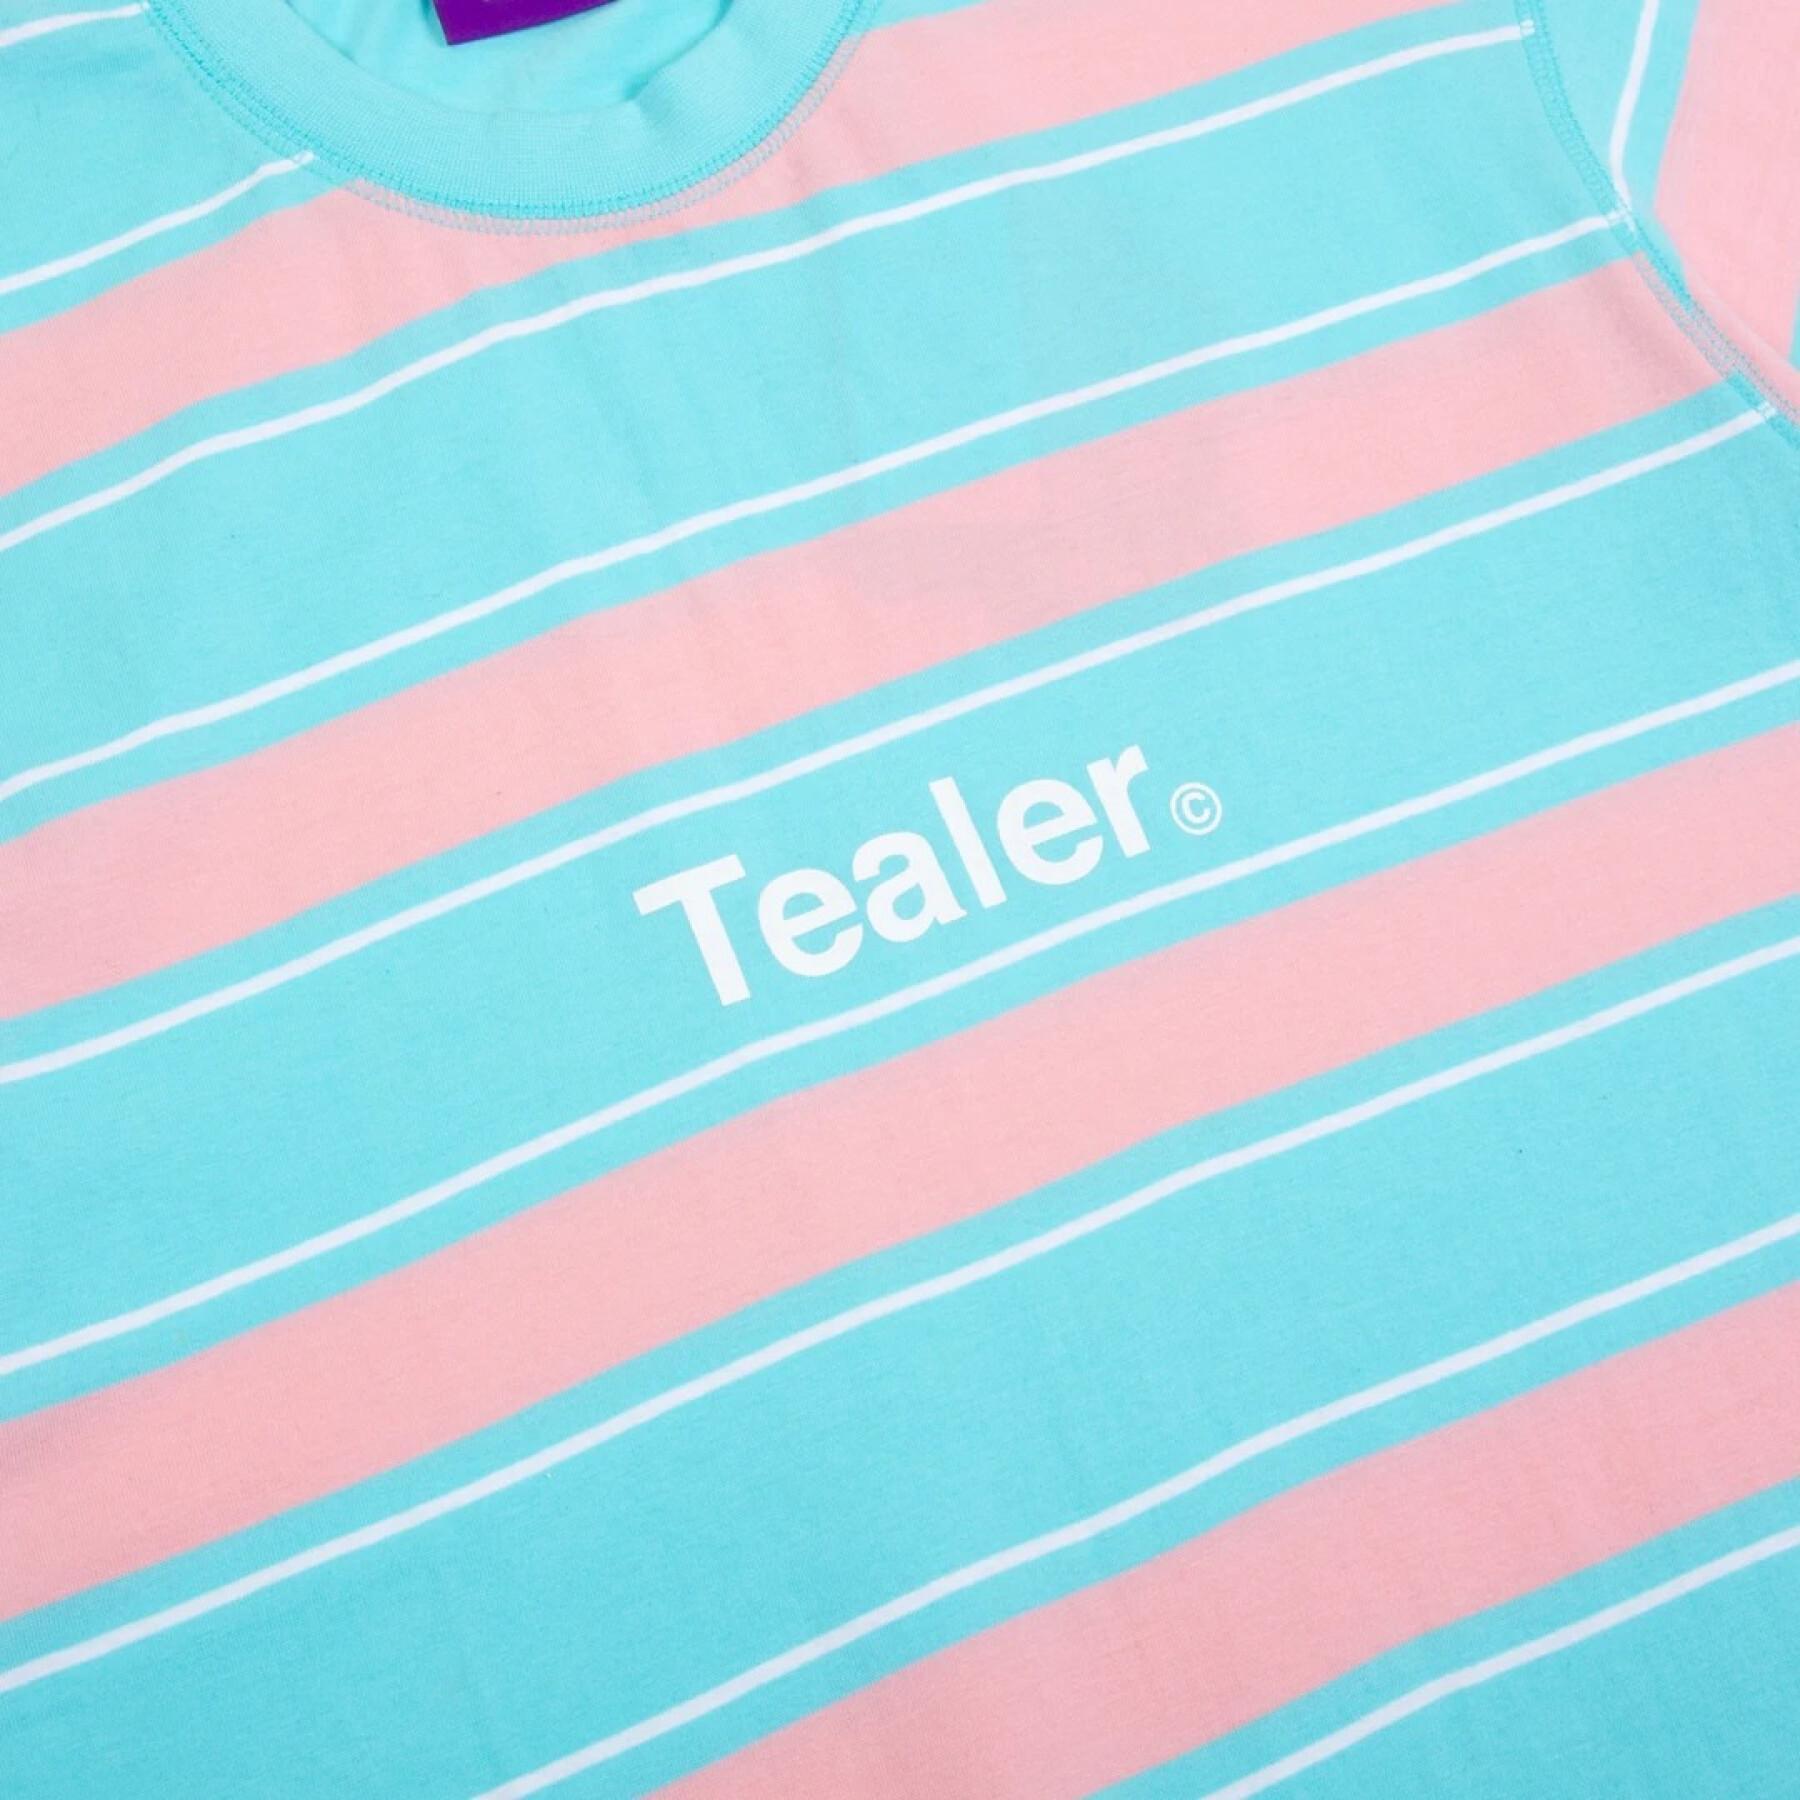 T-shirt Tealer Perfect Stripes